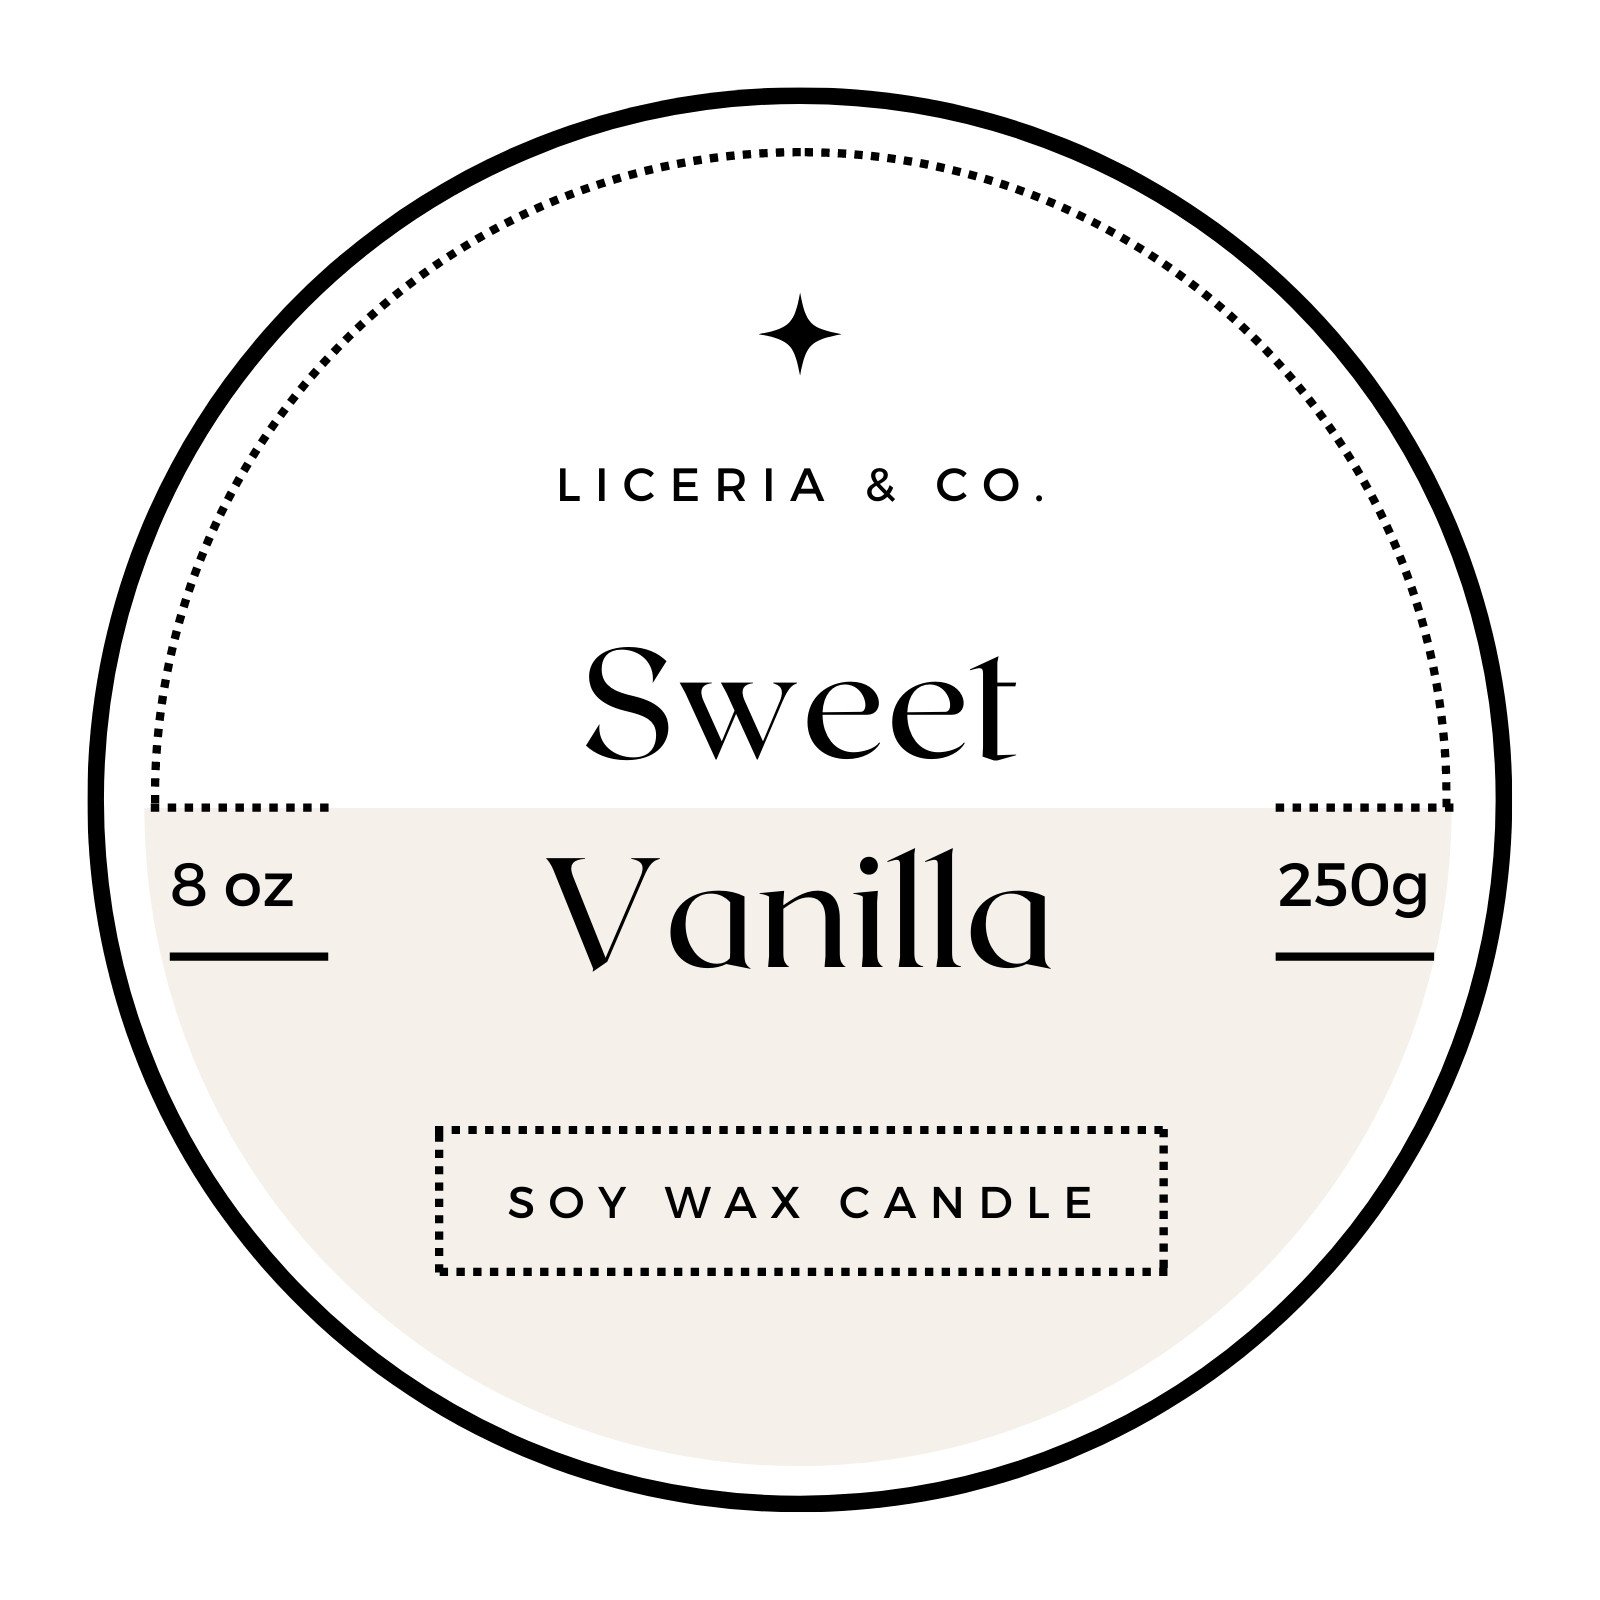 Minimalist Candle Tin Label Canva Template | Stella